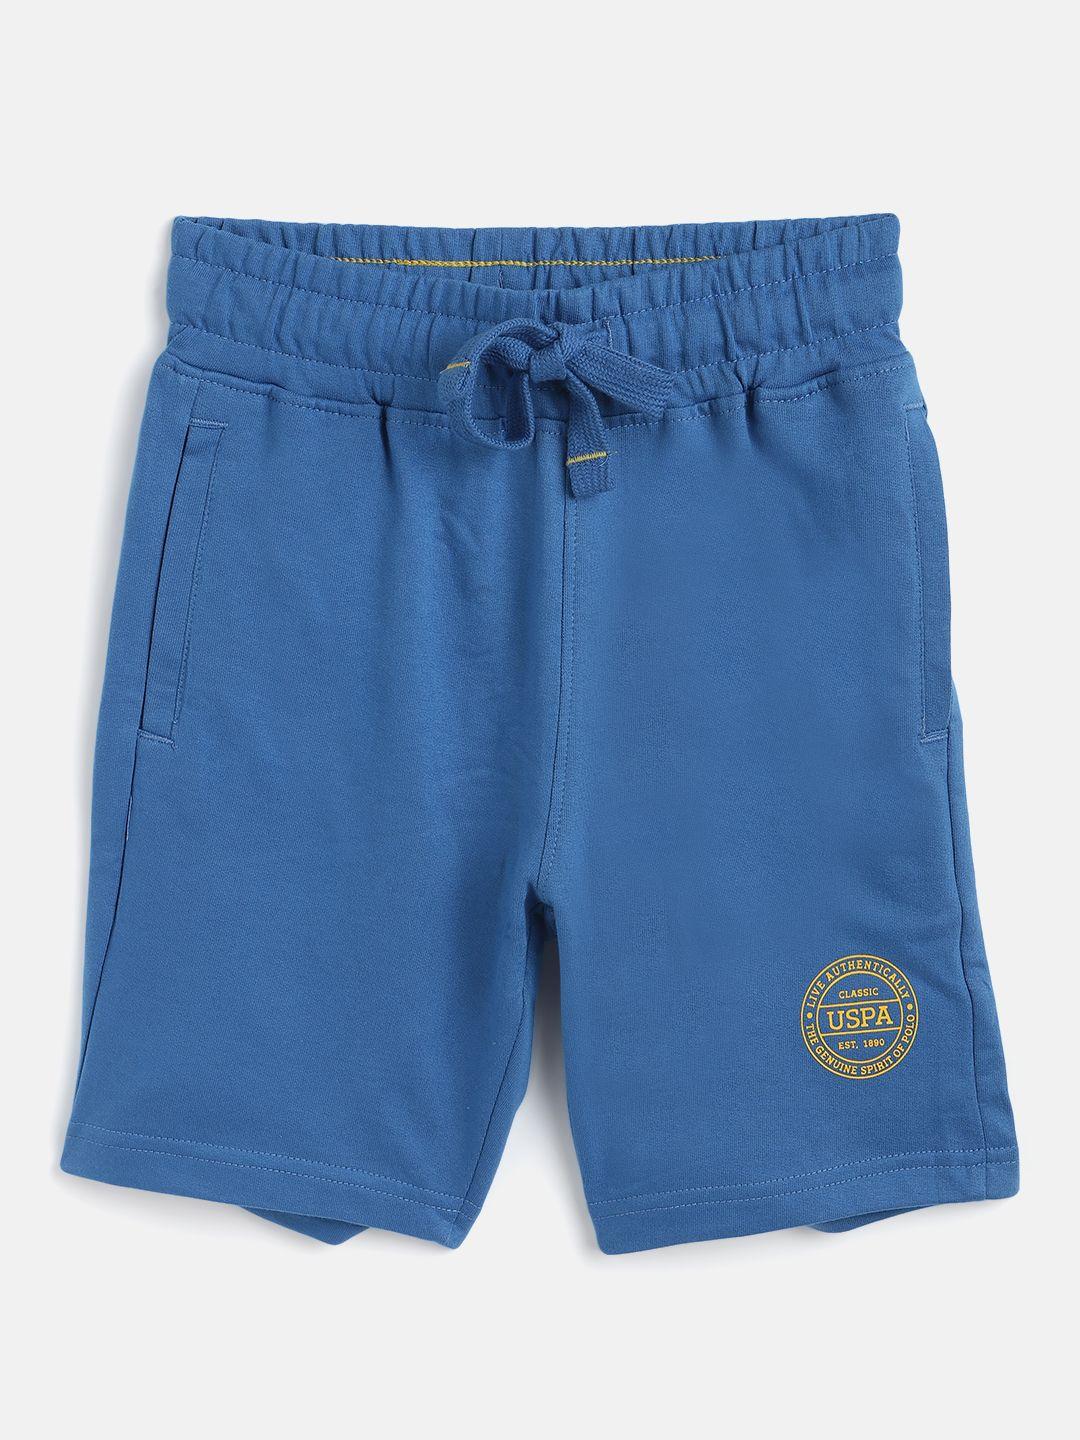 u.s.-polo-assn.-kids-boys-blue-cotton-solid-lounge-shorts